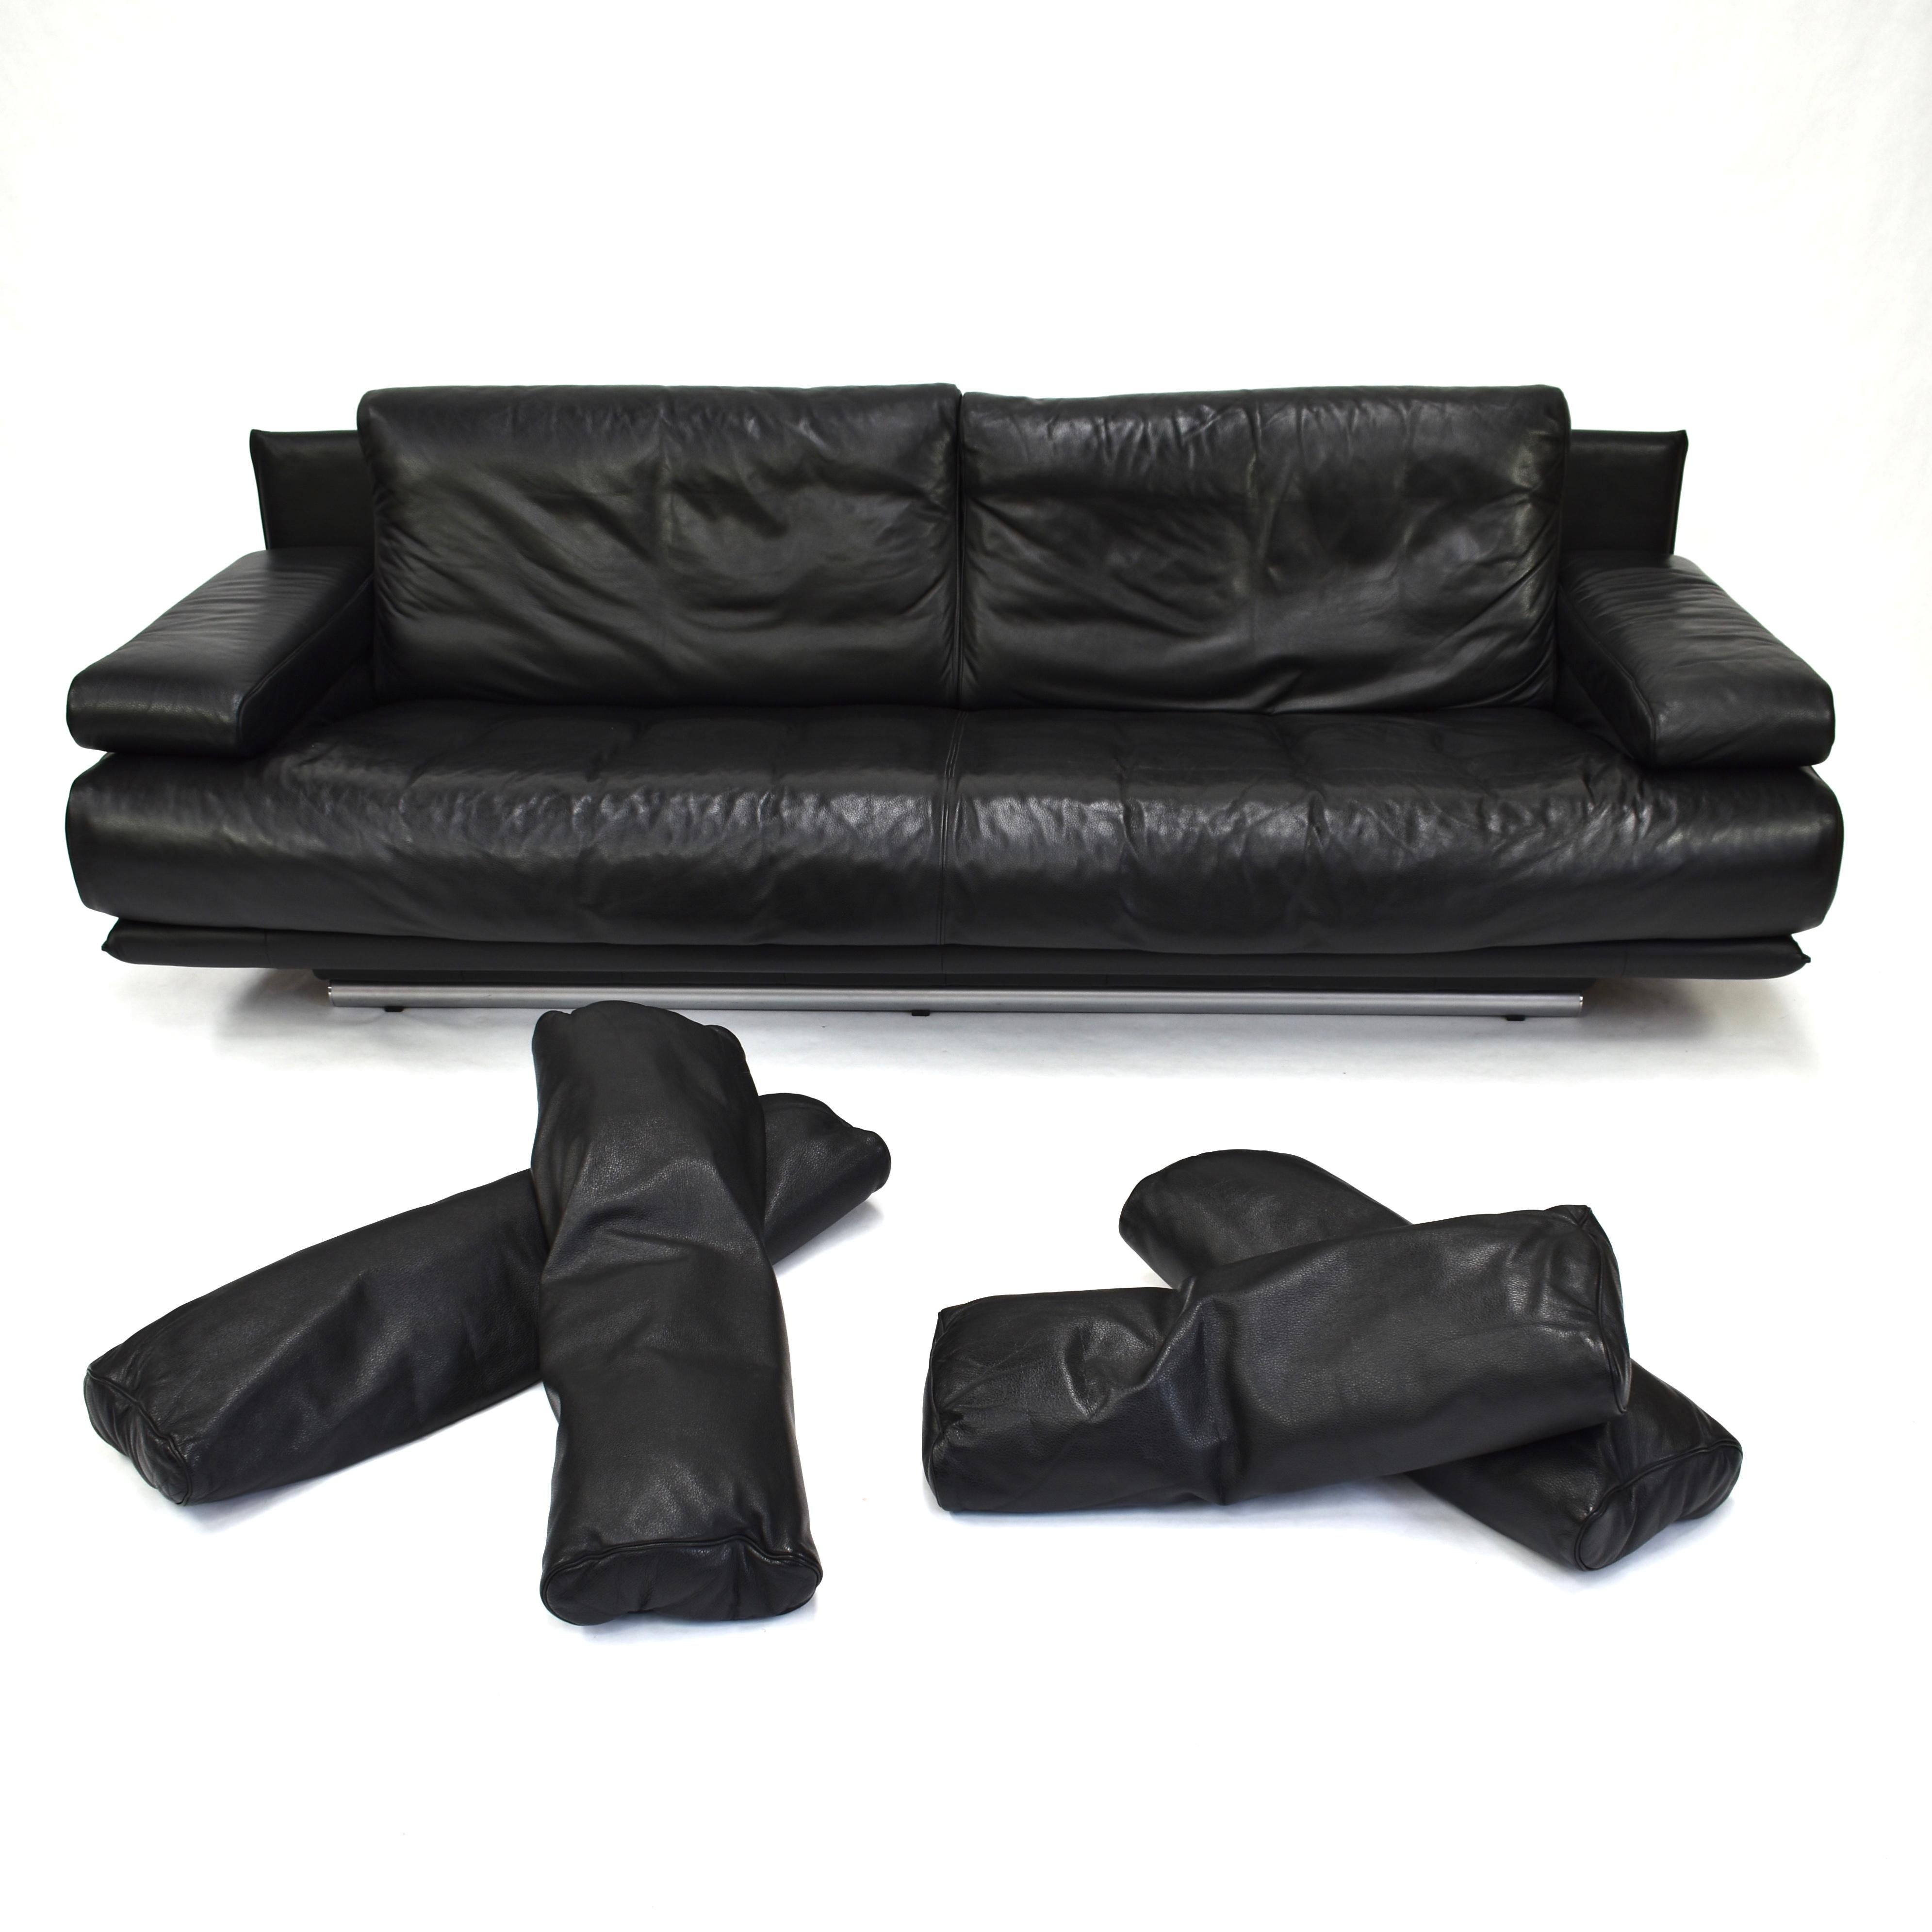 Rolf Benz Model 6500 Sofa in Black Leather by Mathias Hoffmann 1